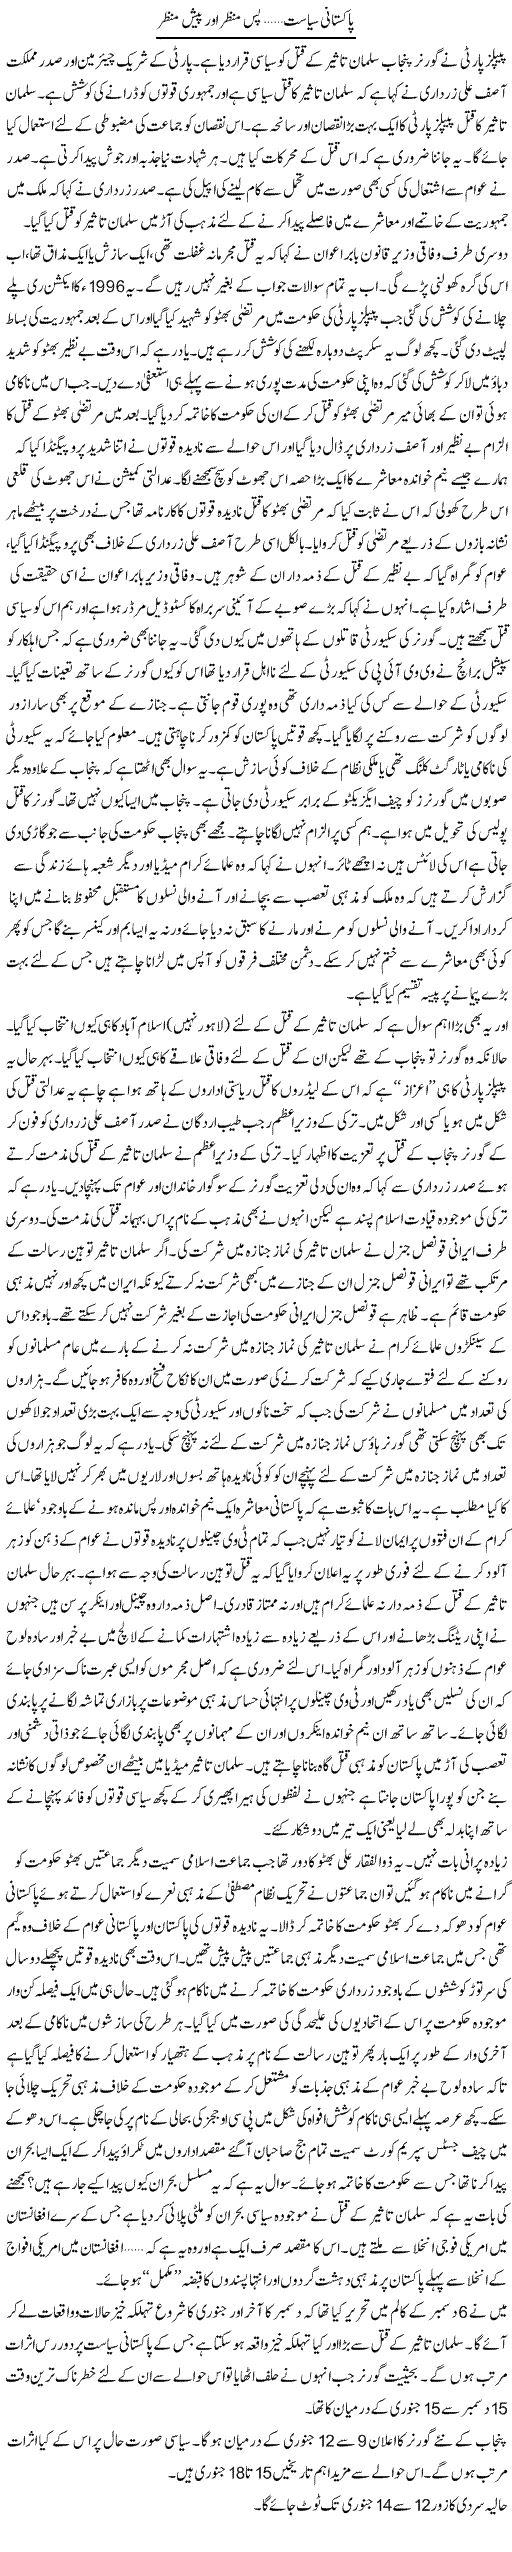 Politics of Pakistan Express Column Zamrad Naqvi 10 January 2011